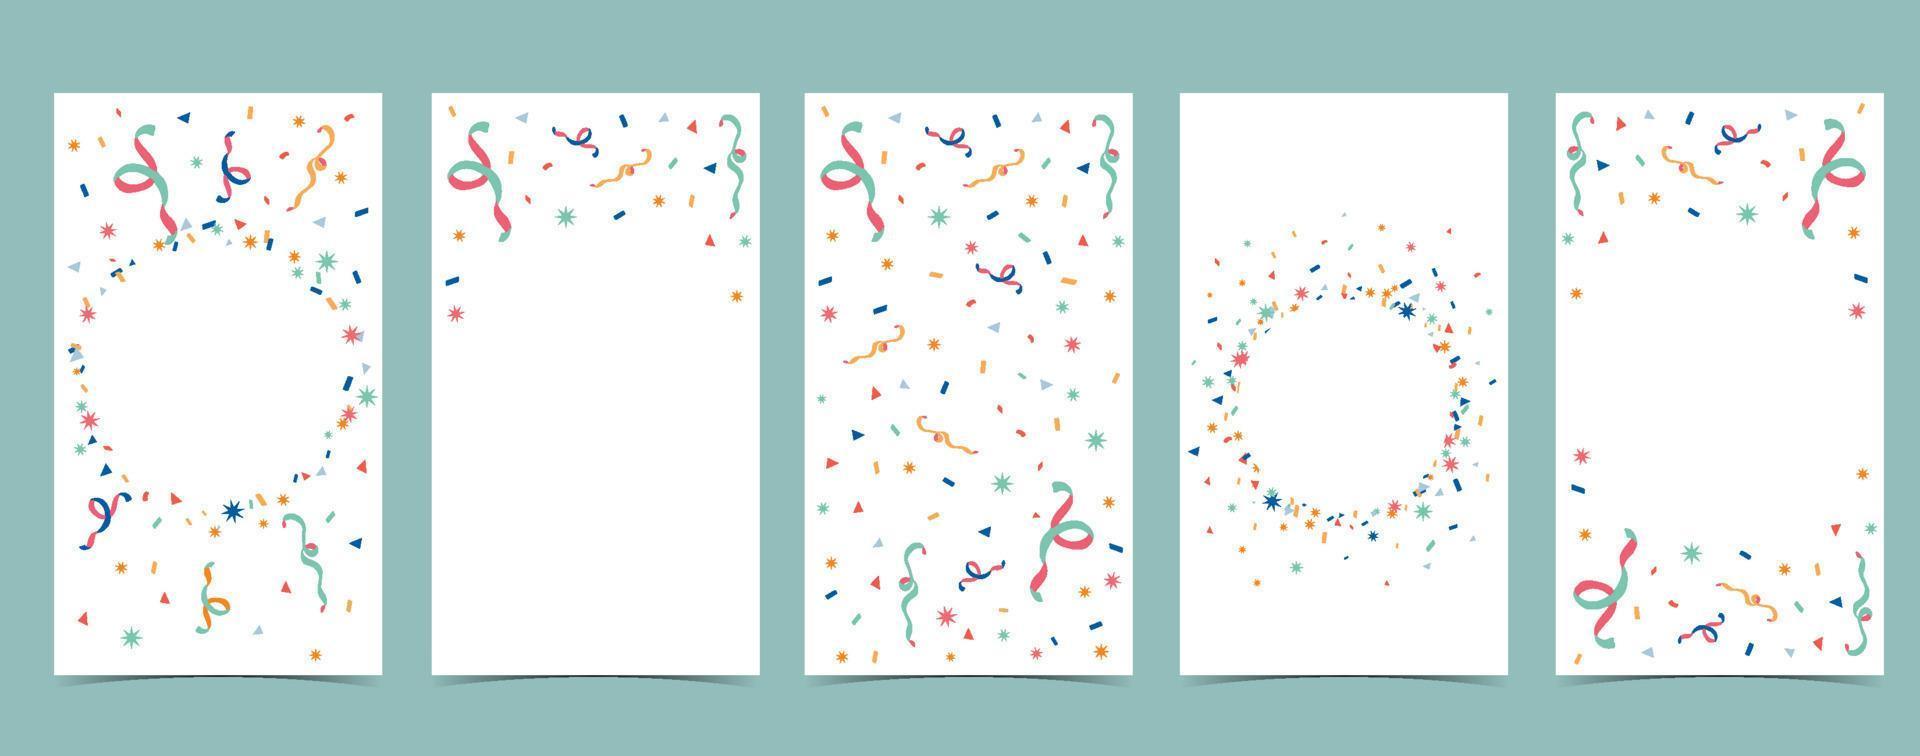 confetti celebration background for social media, website vector